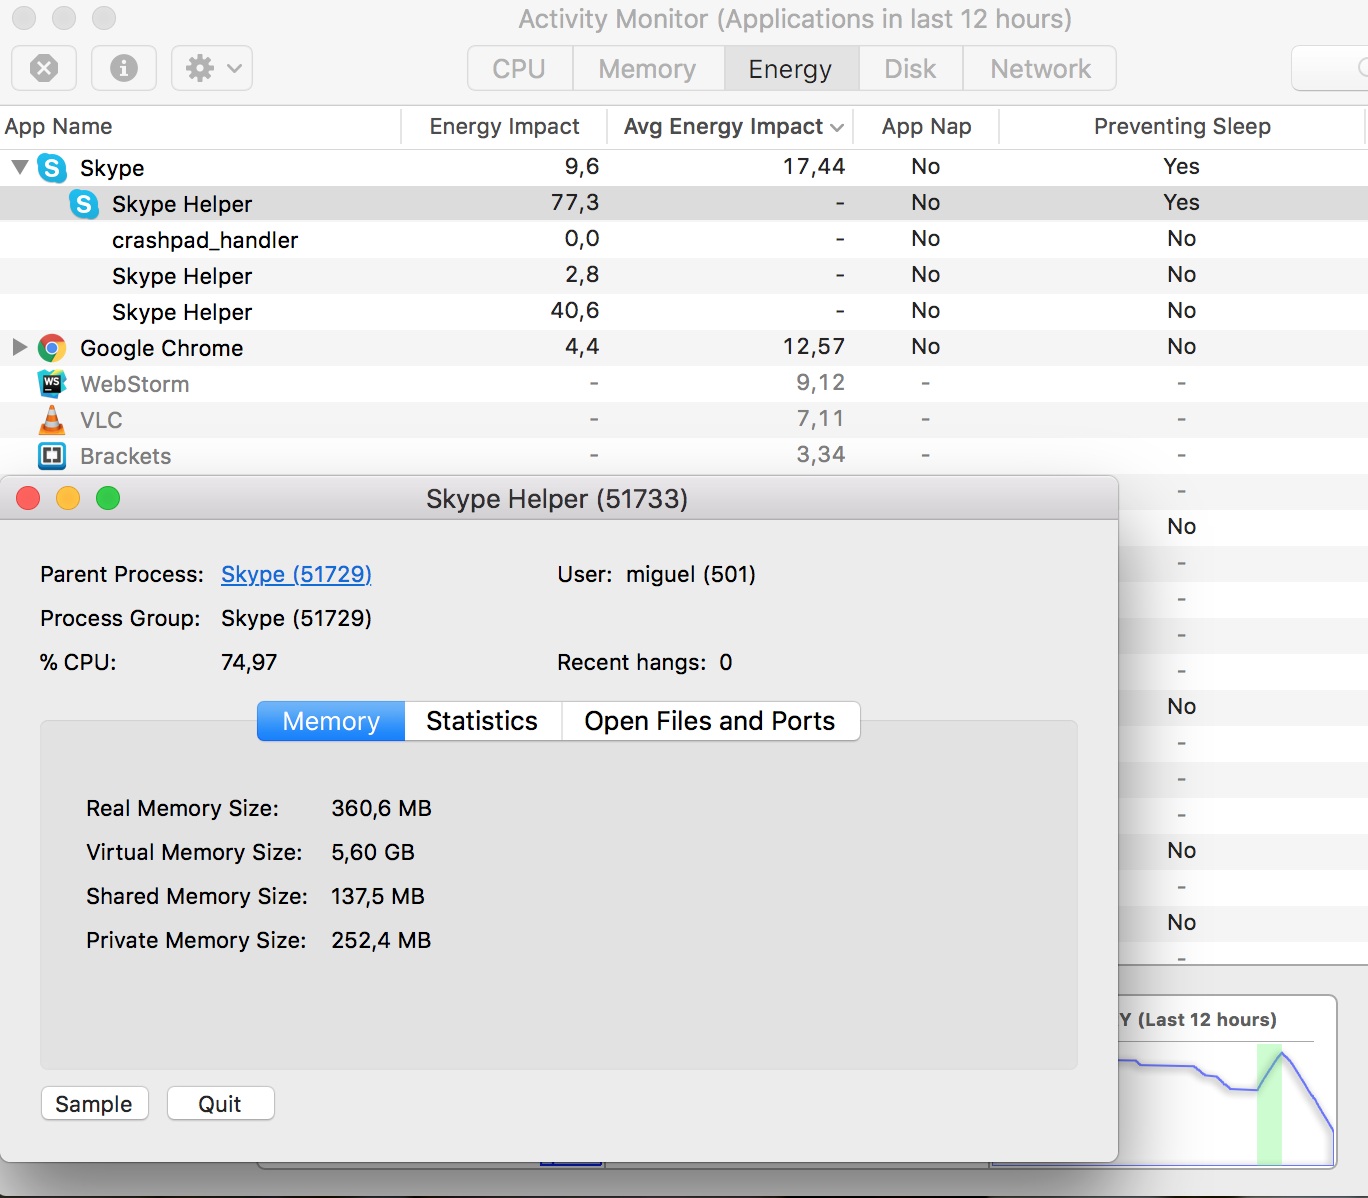 skype download for mac os 10.8.5